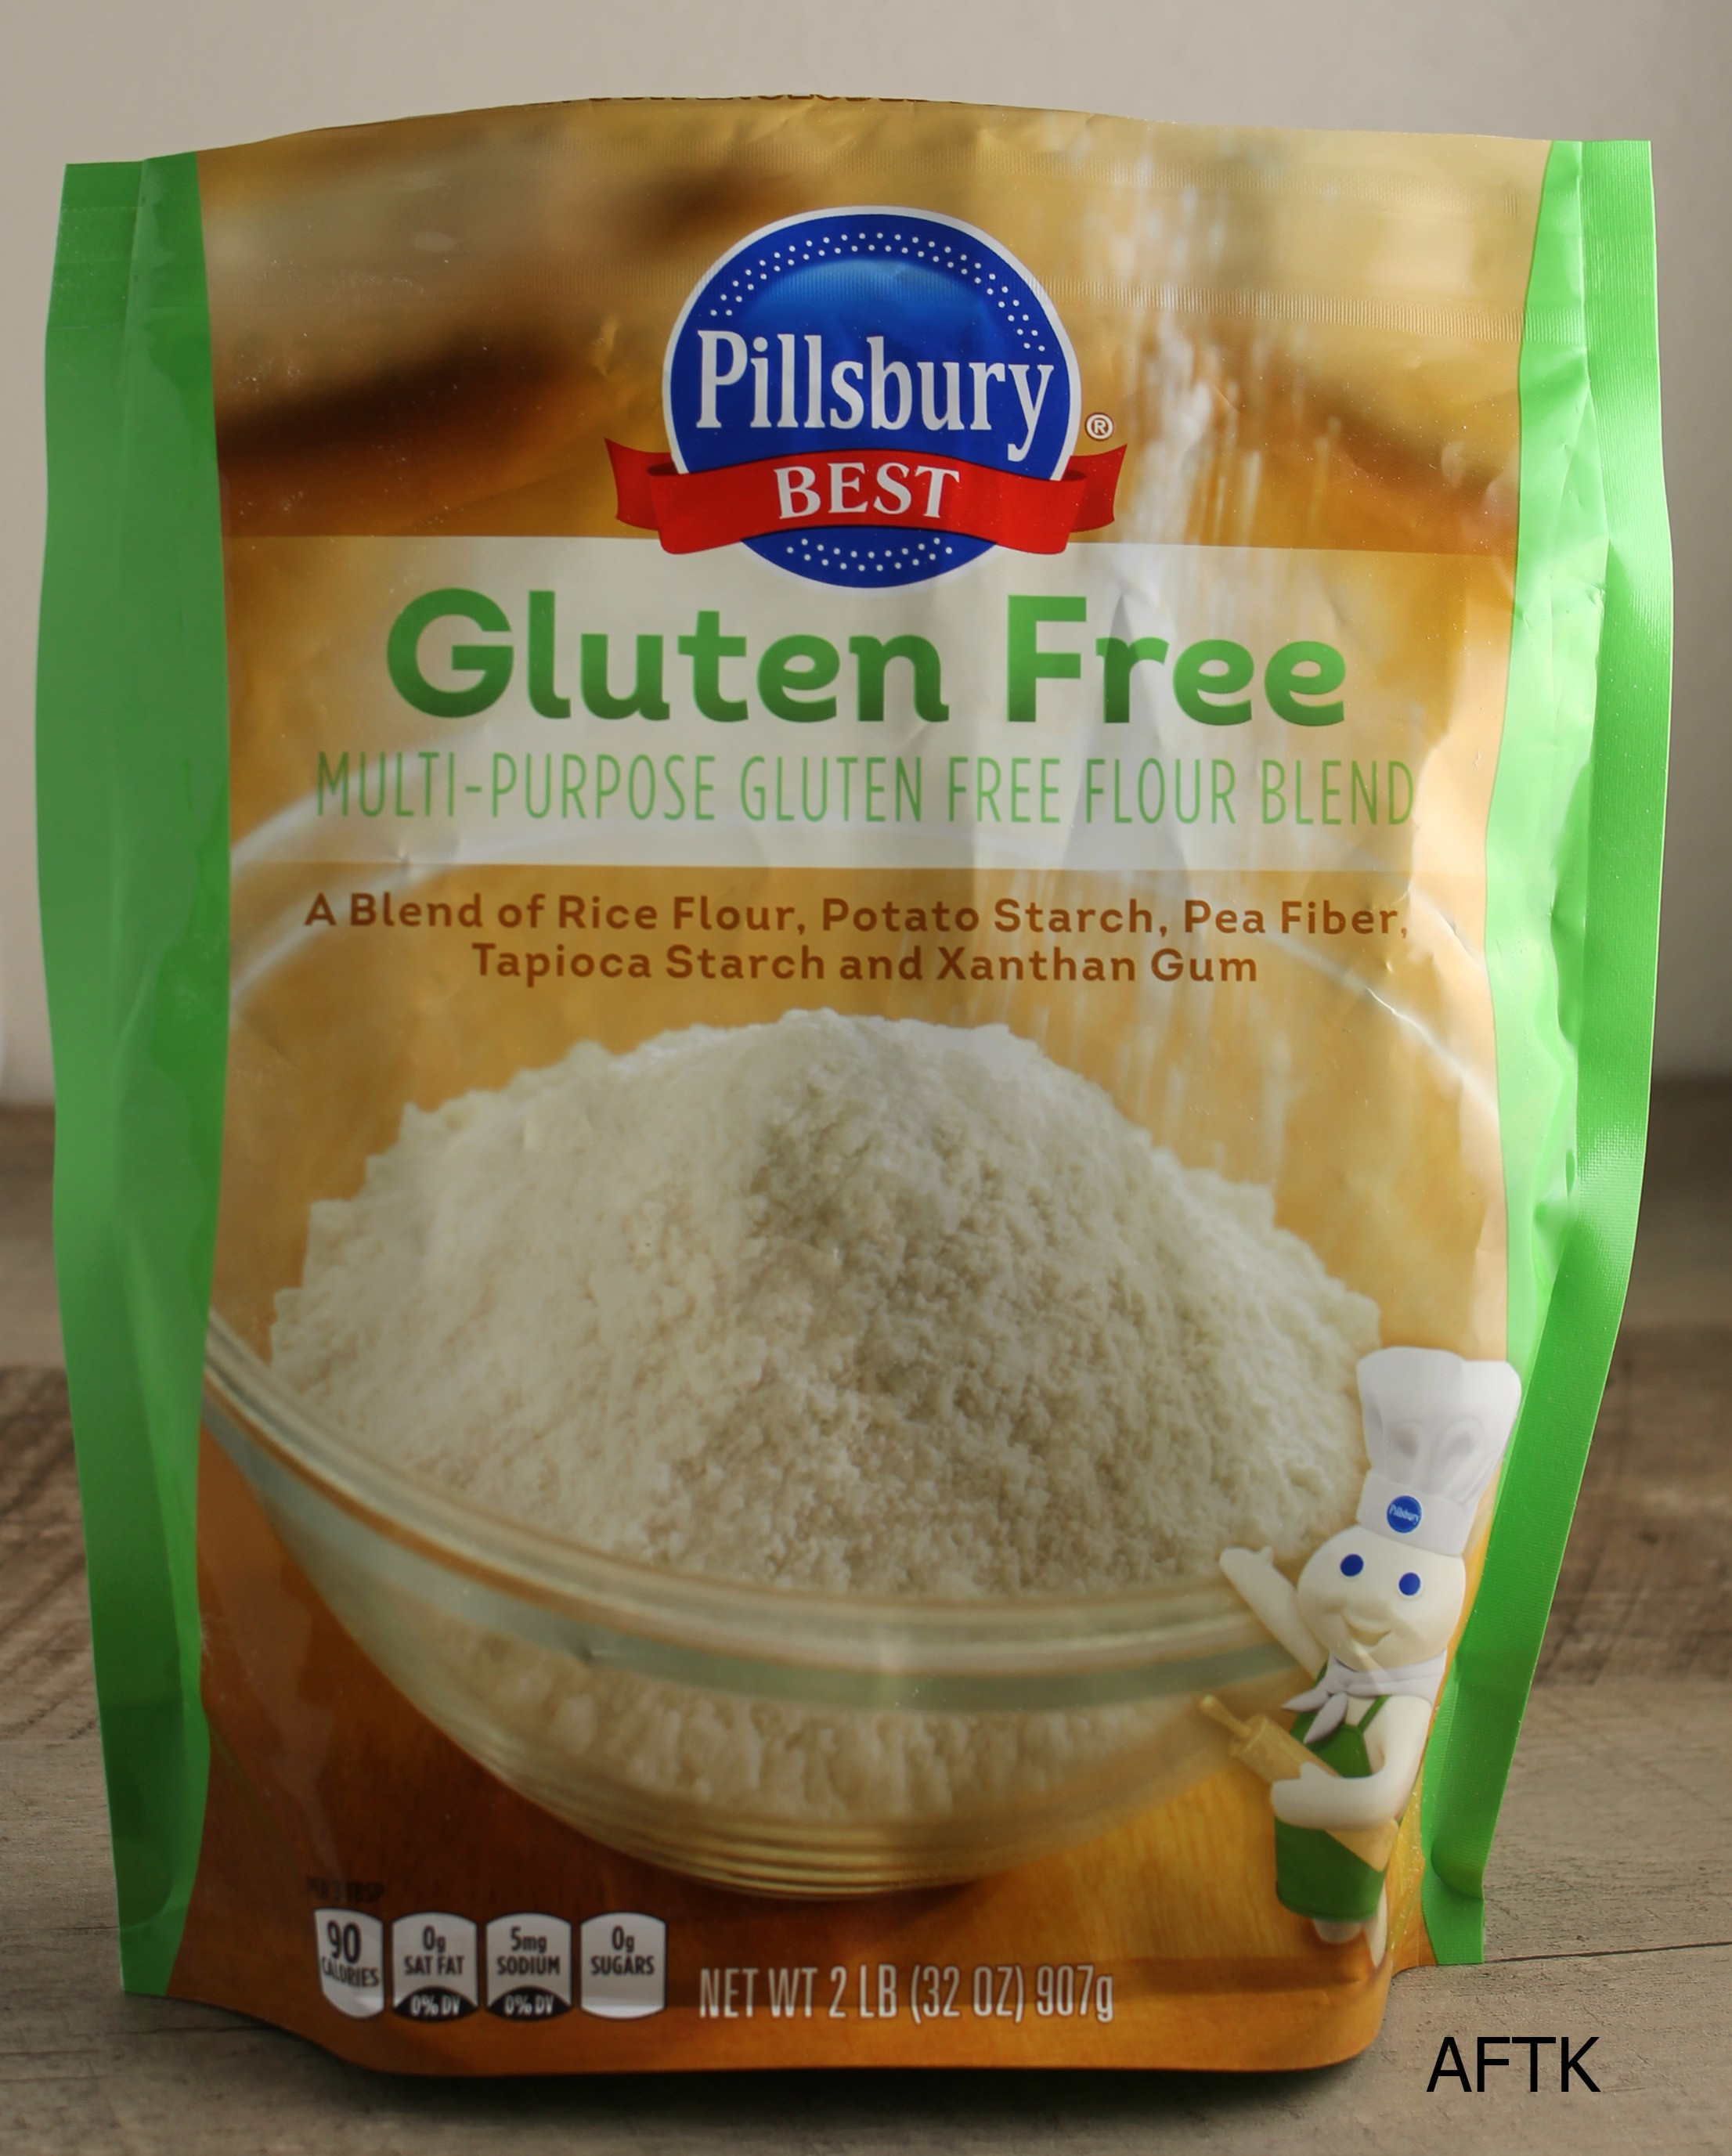 Pillsbury Gluten Free Flour Bread Recipe
 Pillsbury Gluten Free Multi Purpose Gluten Free Flour